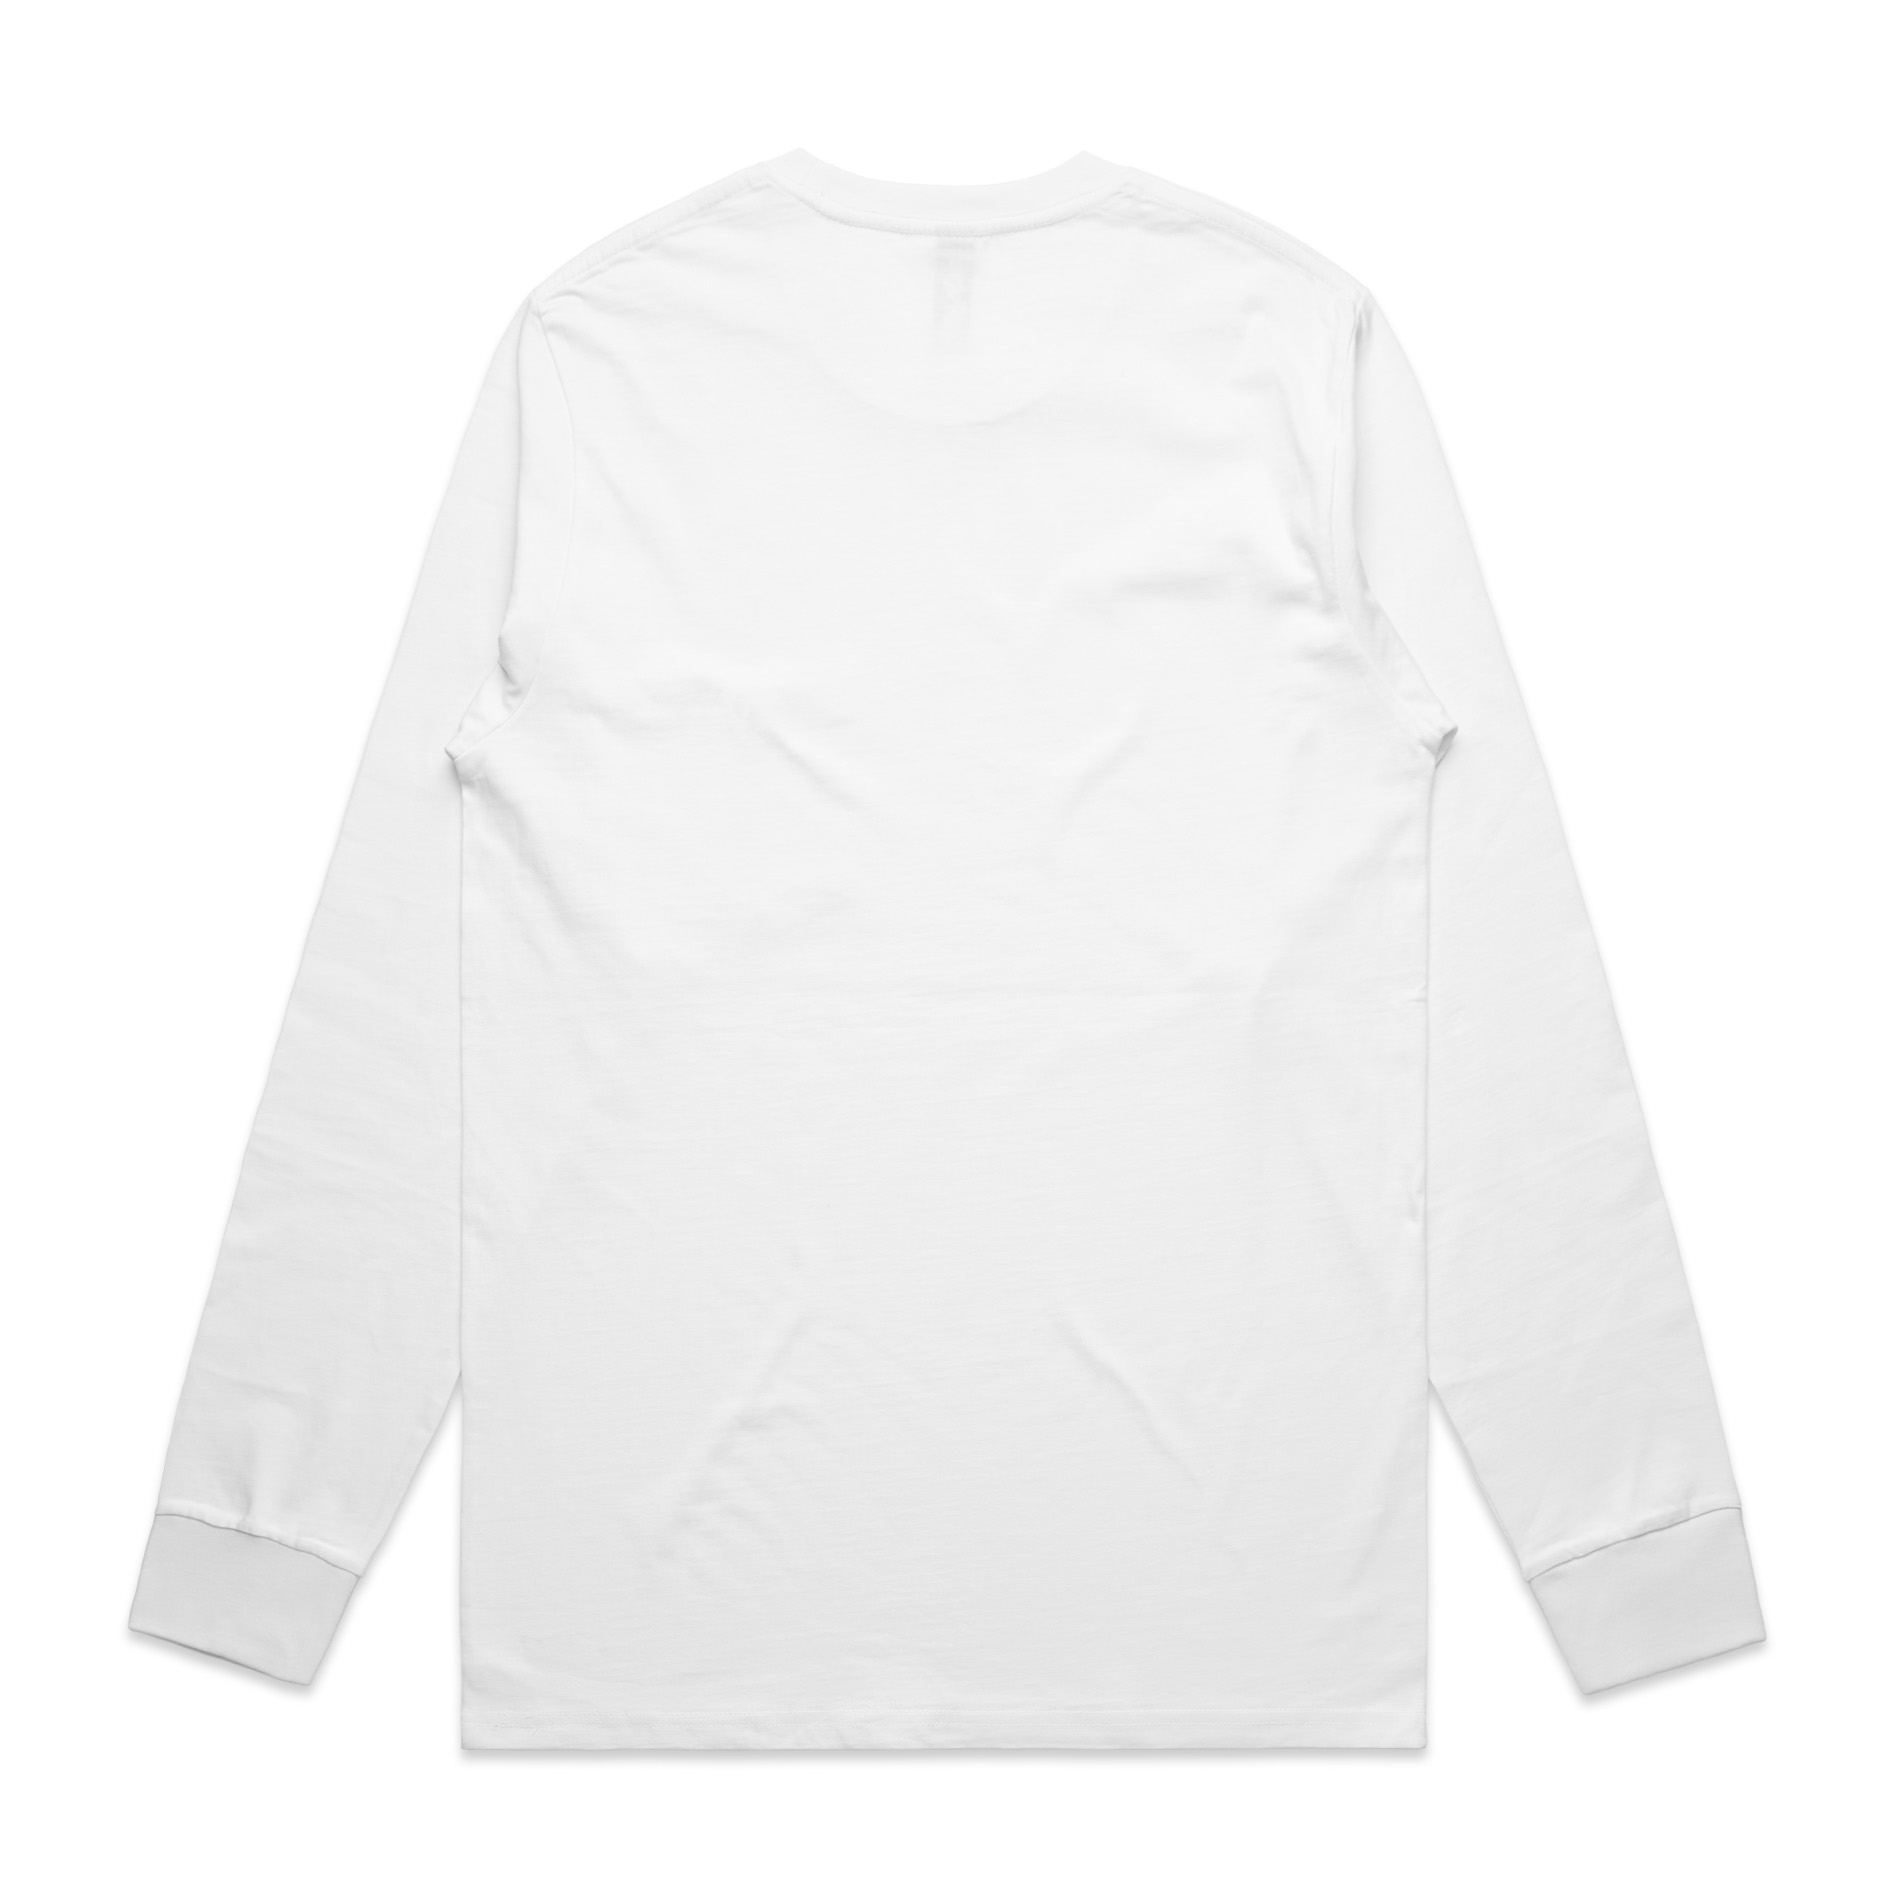 Men's AS Colour Classic Long Sleeve Tee - White - Uniform Edit